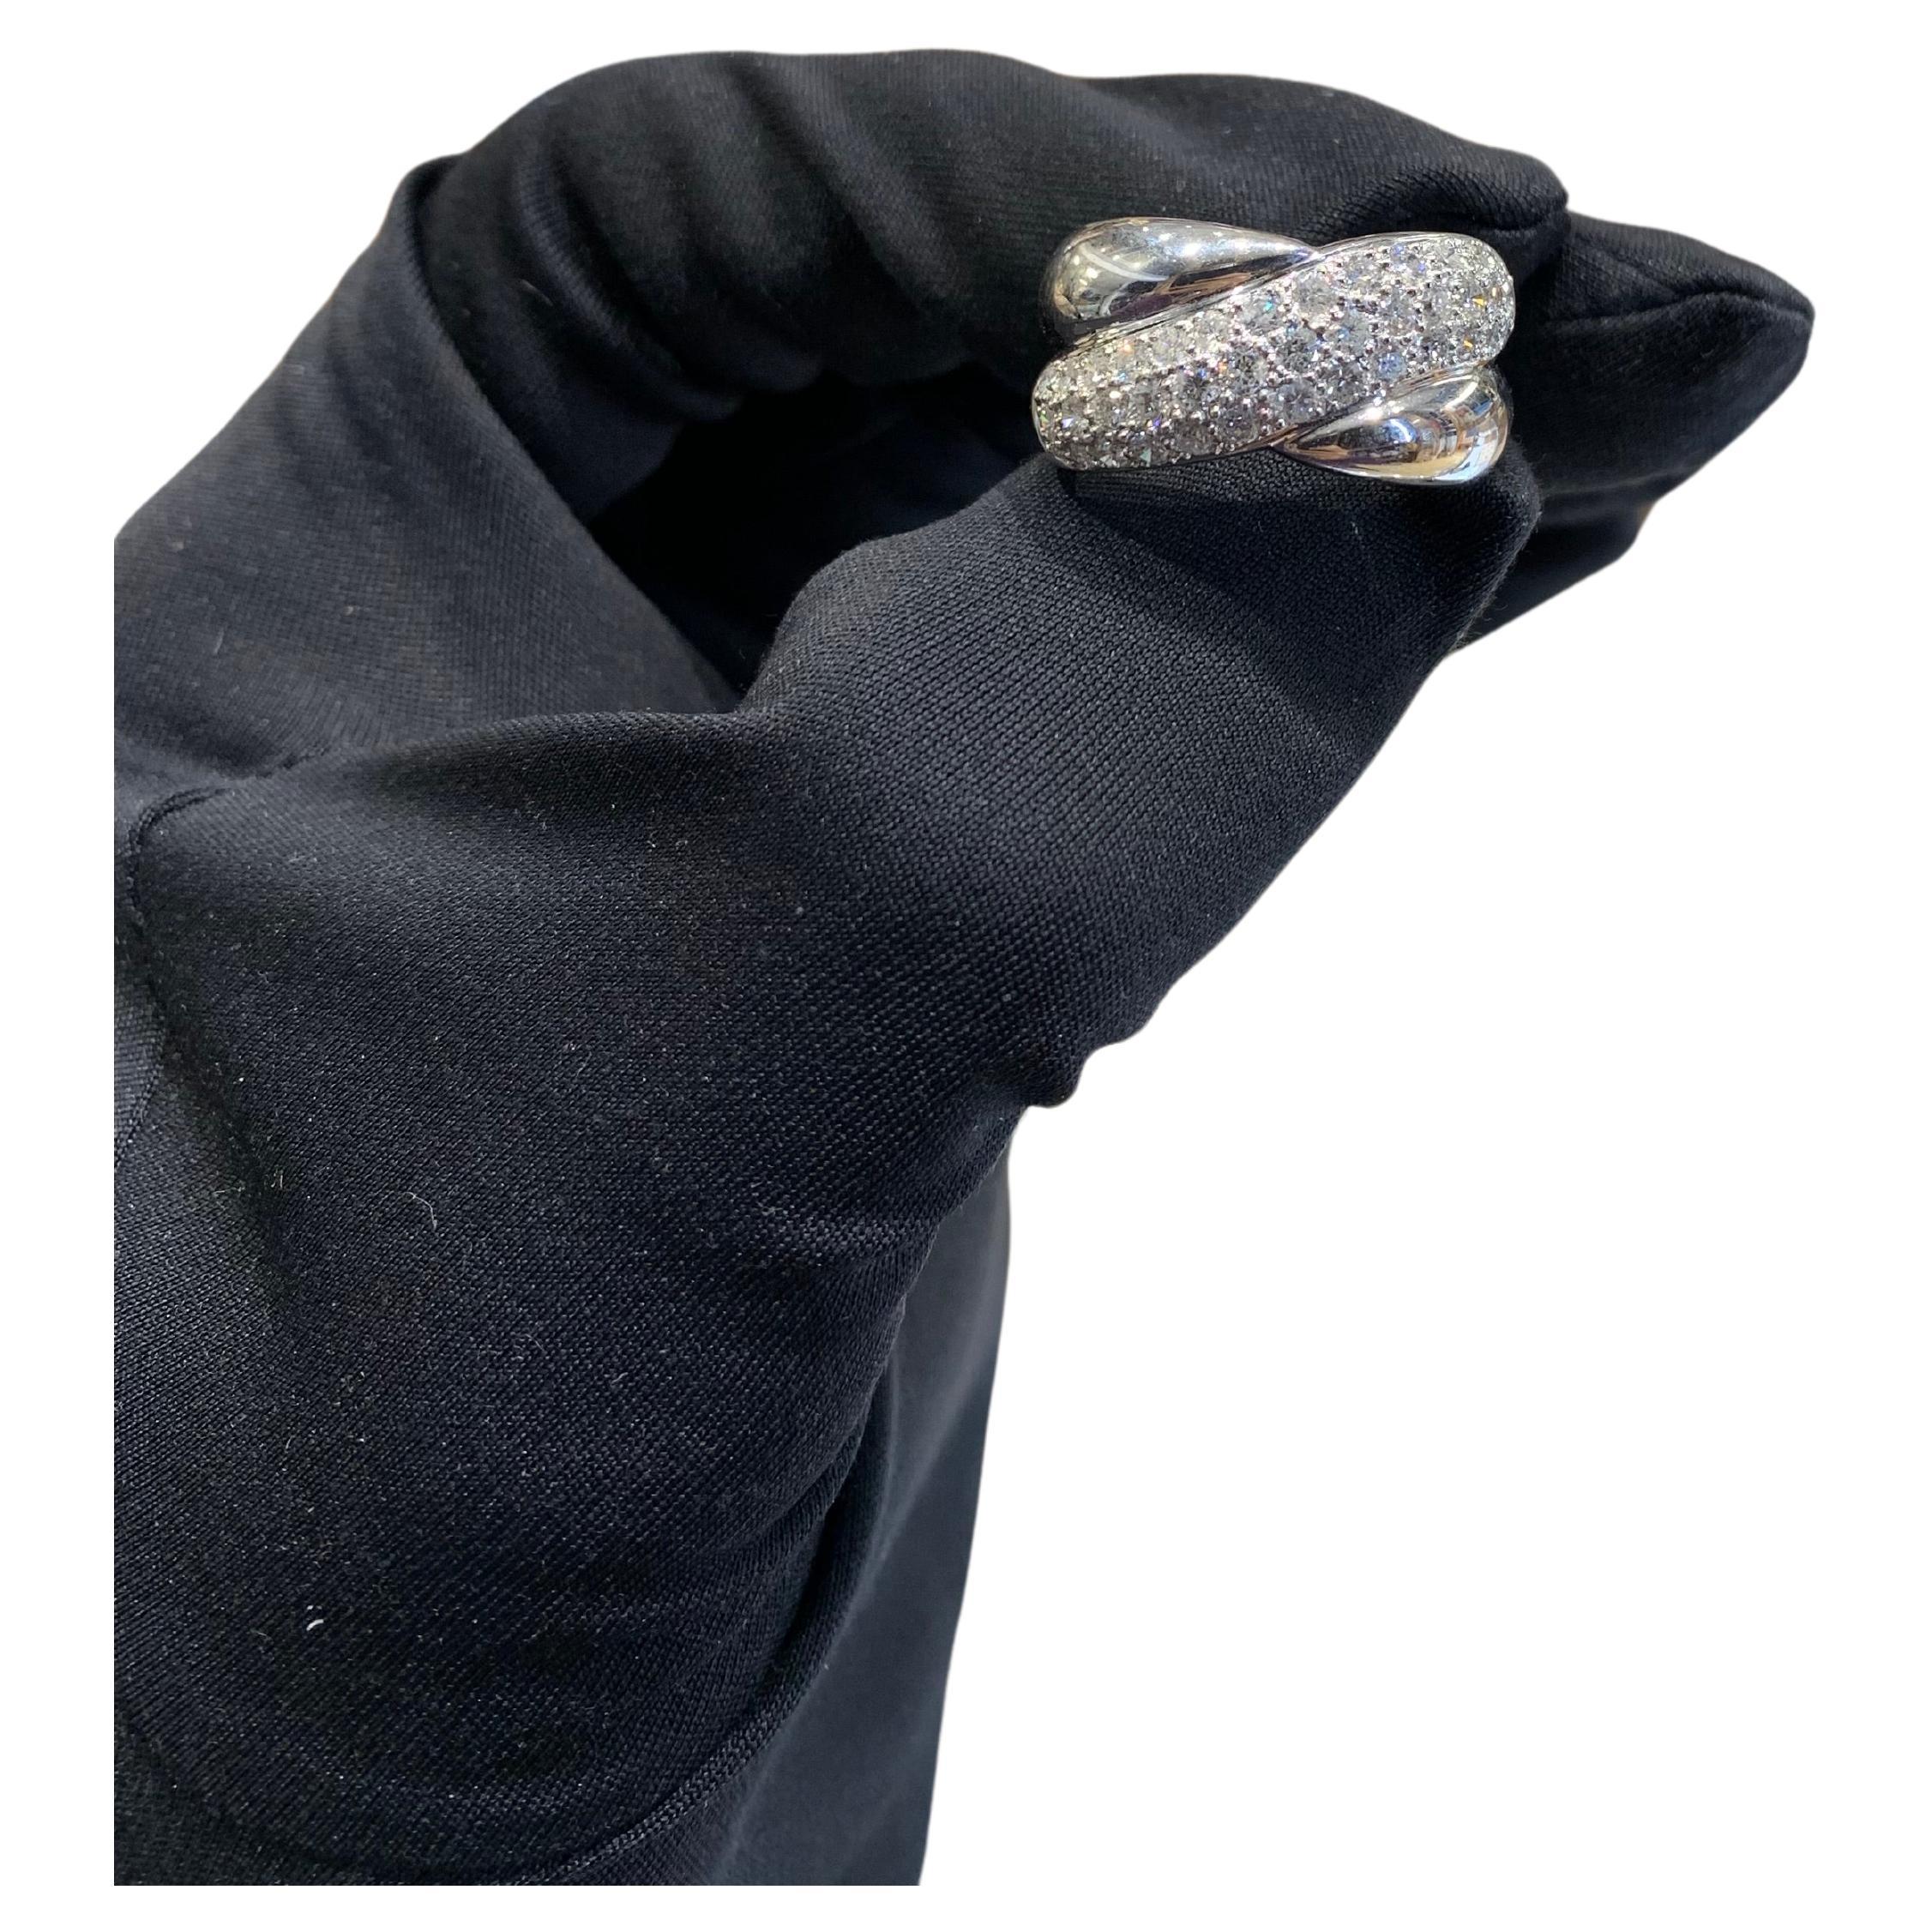 18k Gold 2.0 Carat Diamond Ring For Sale